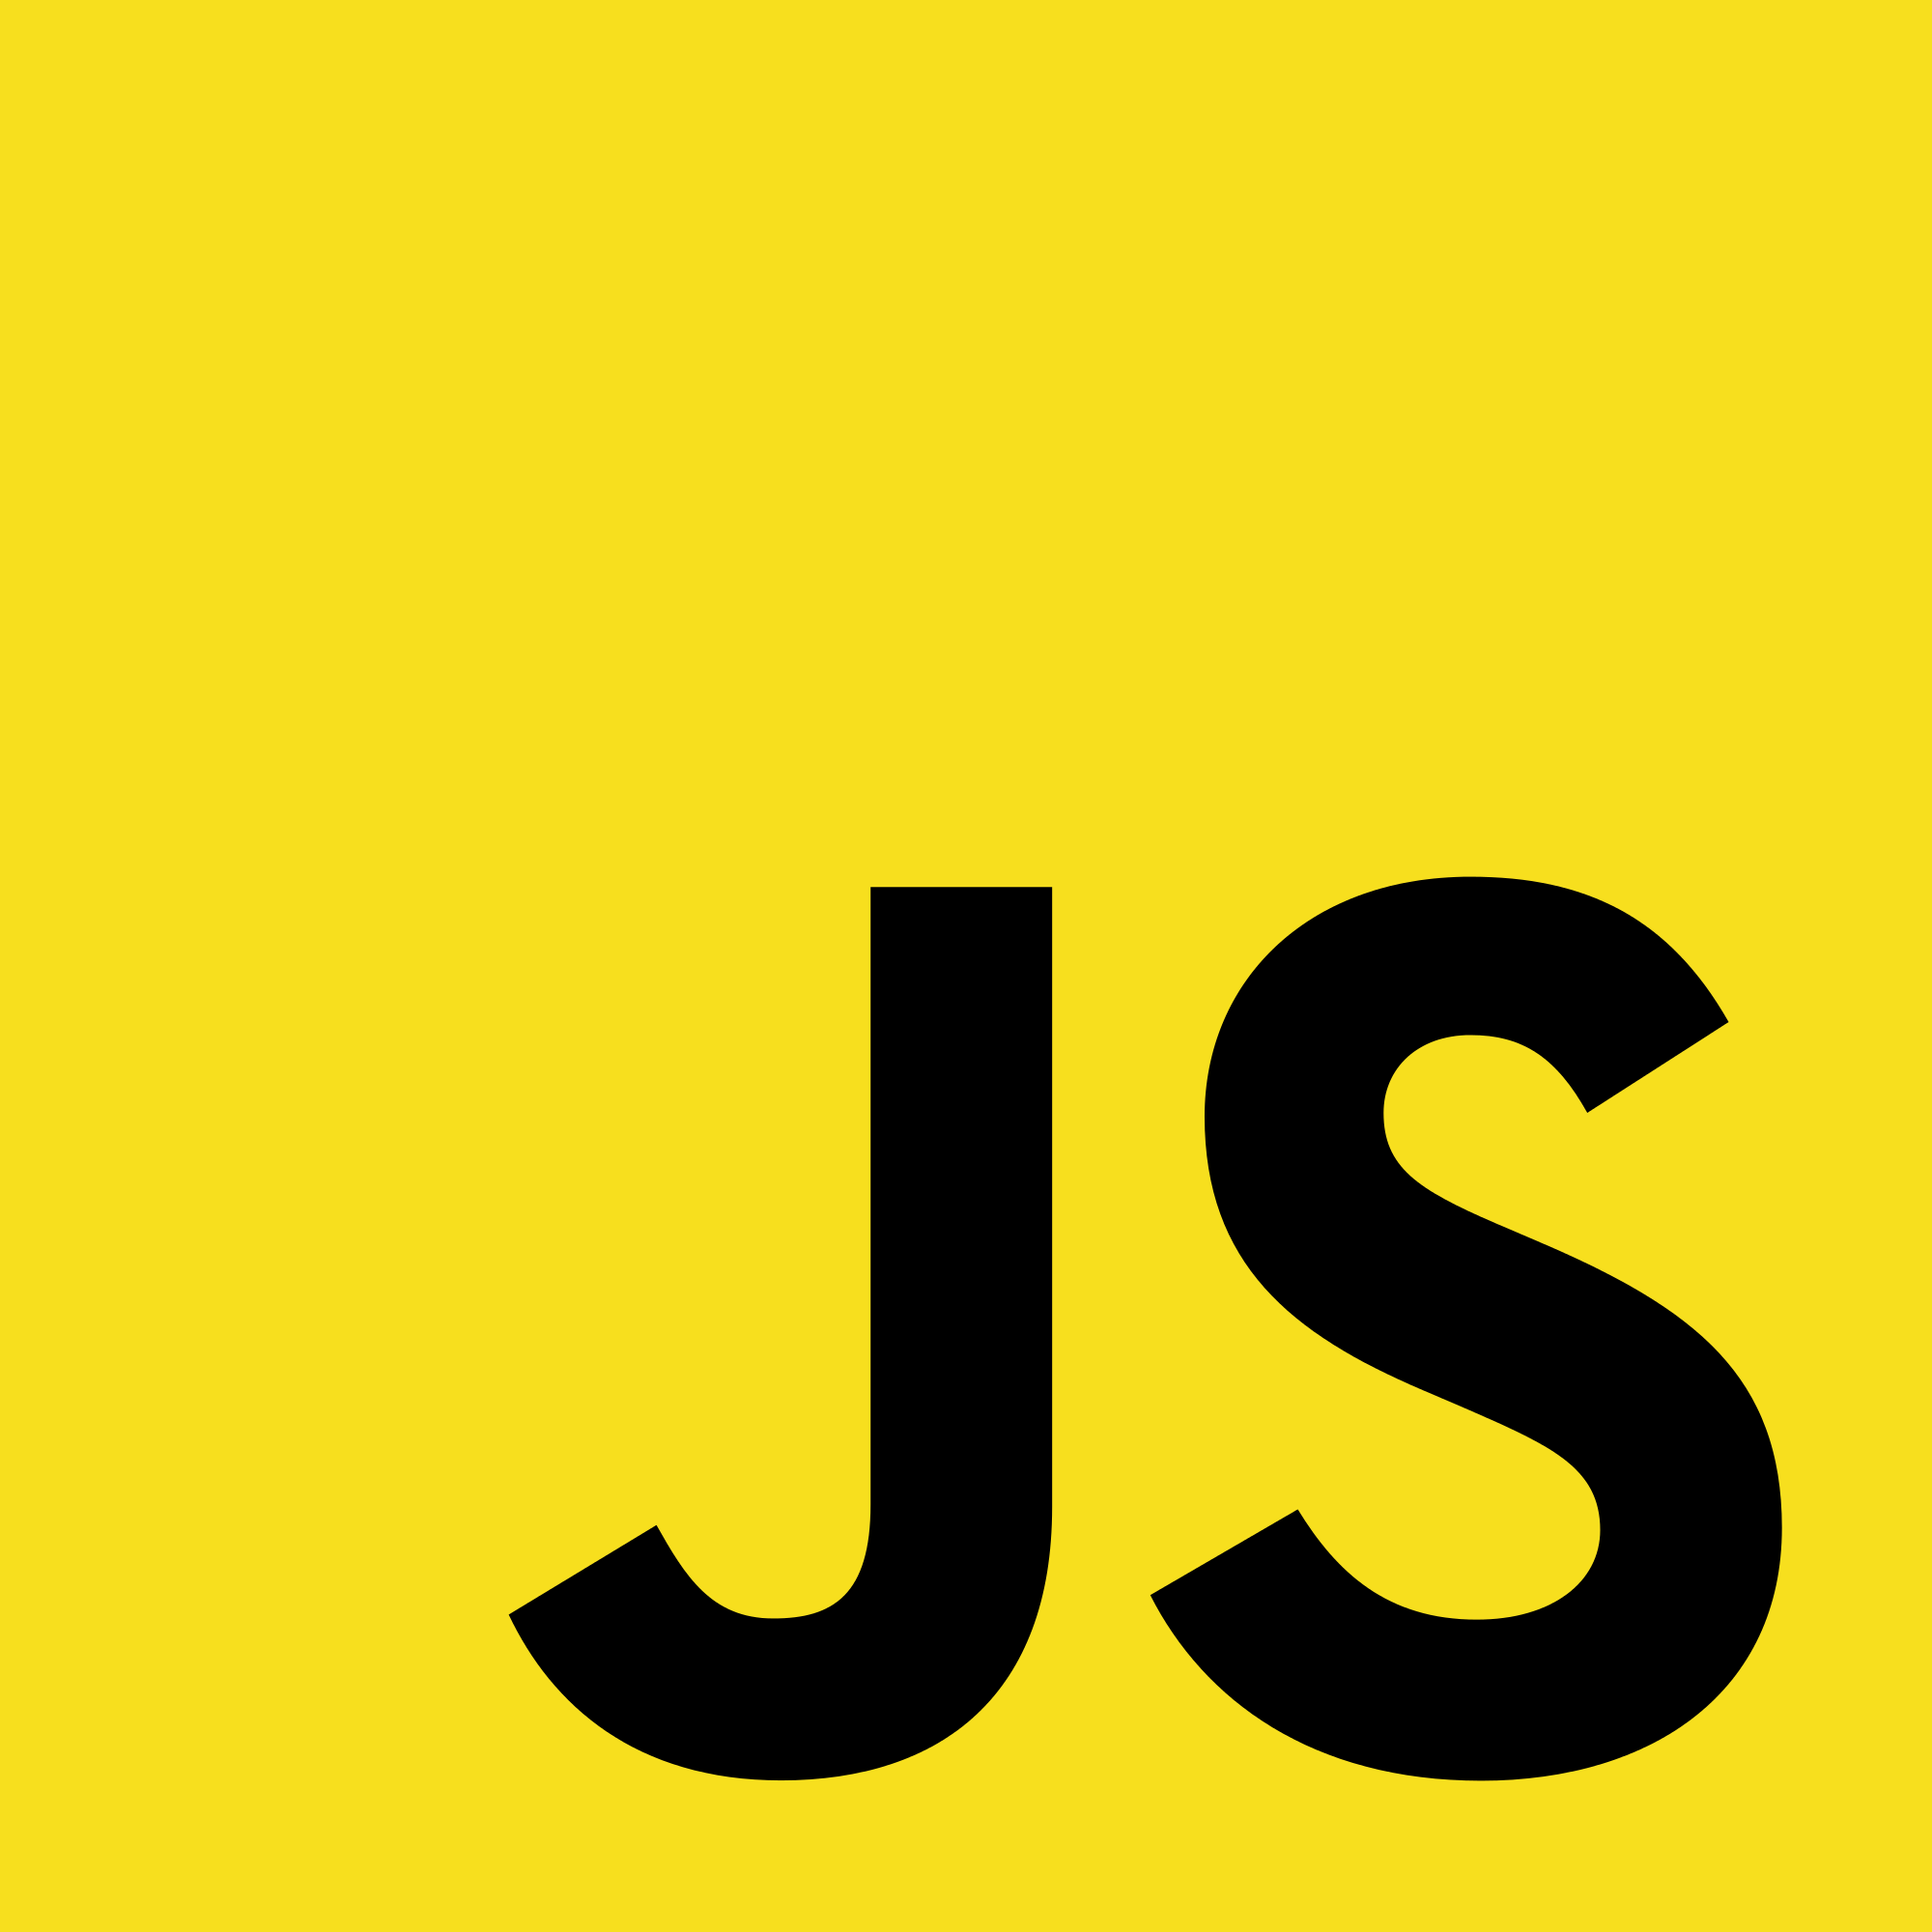 File:Unofficial JavaScript logo 2.svg